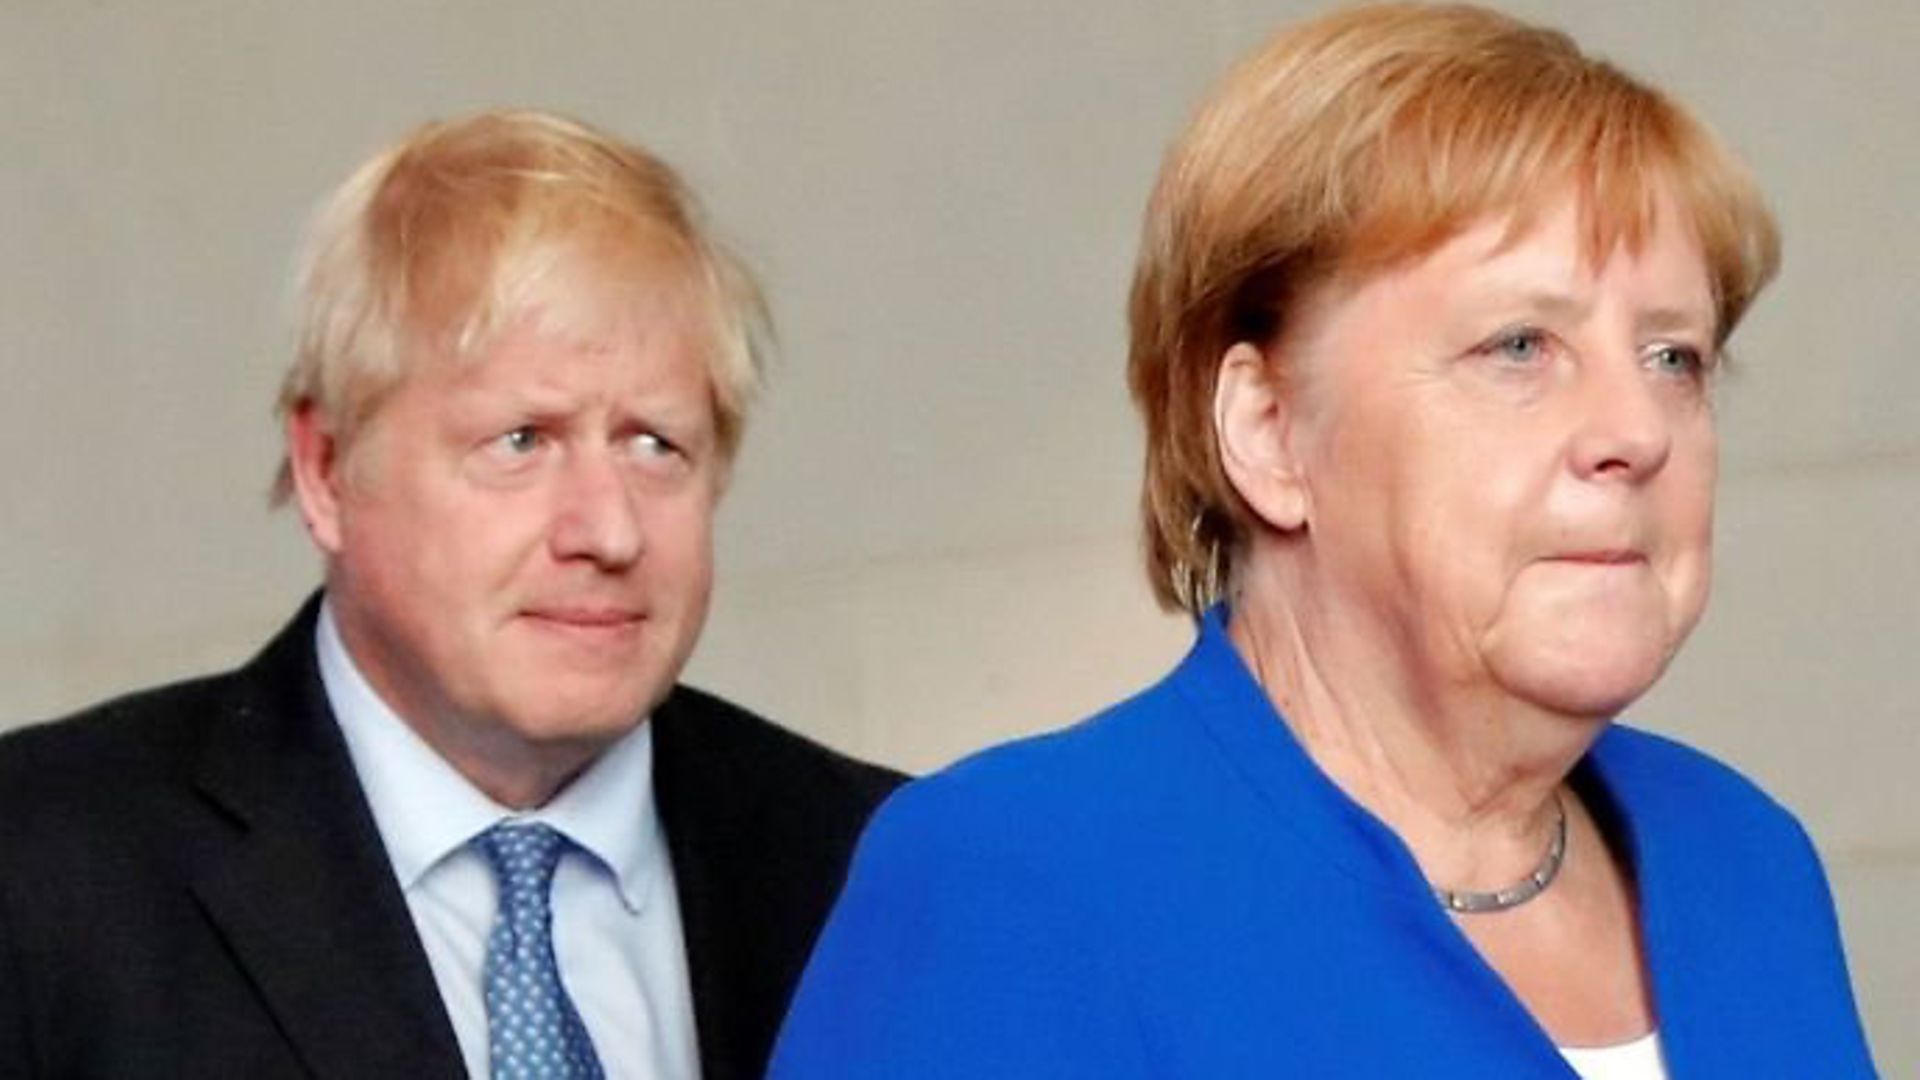 Boris Johnson and Angela Merkel have had different approaches to the coronavirus - Credit: PA